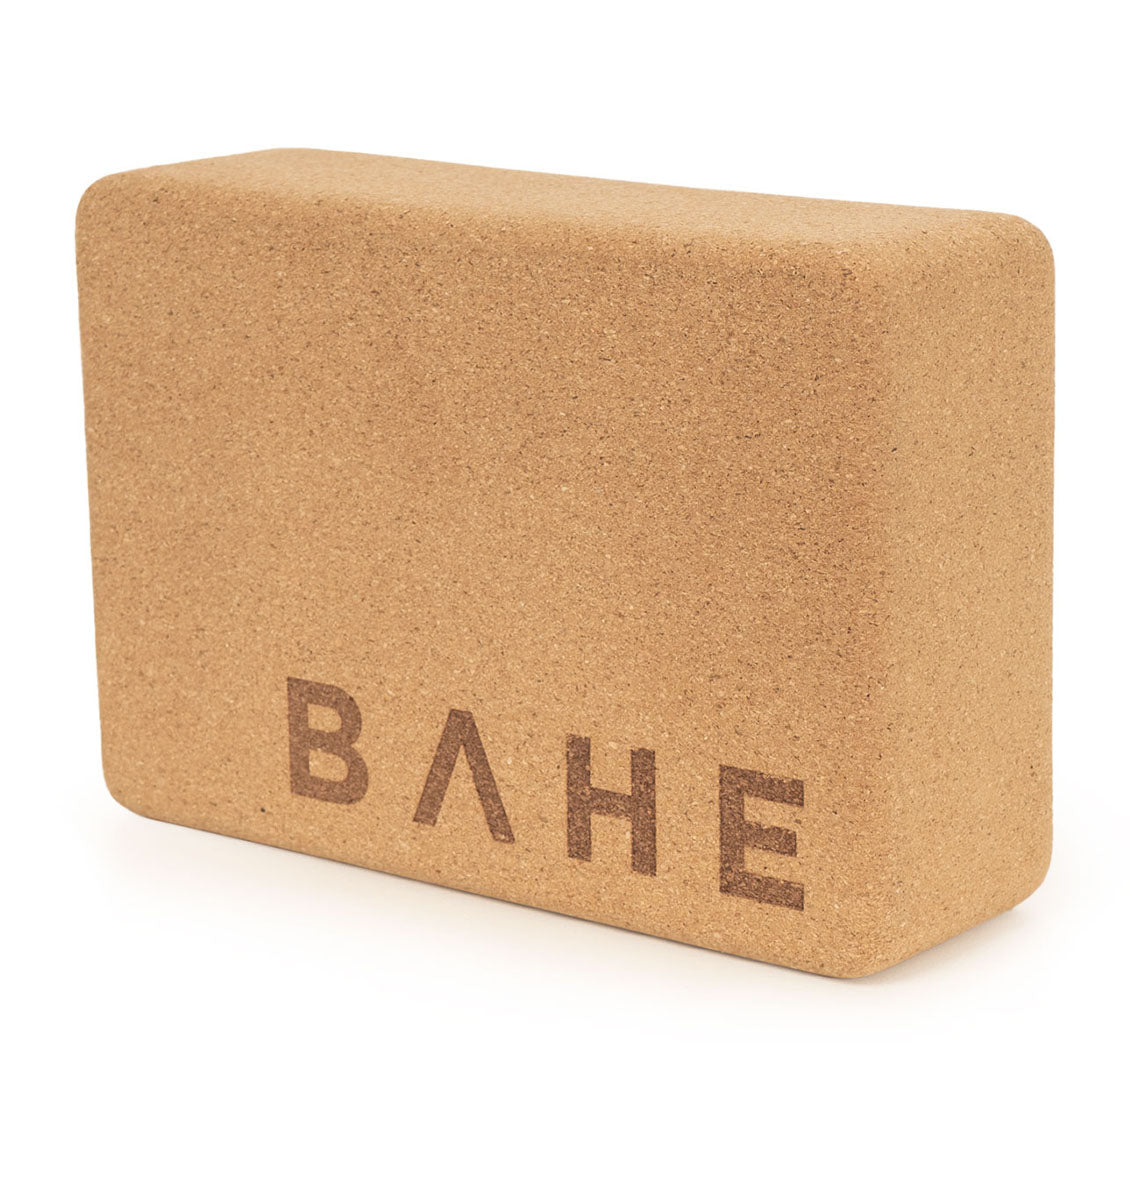 BAHE Yoga Block - Cork - 1